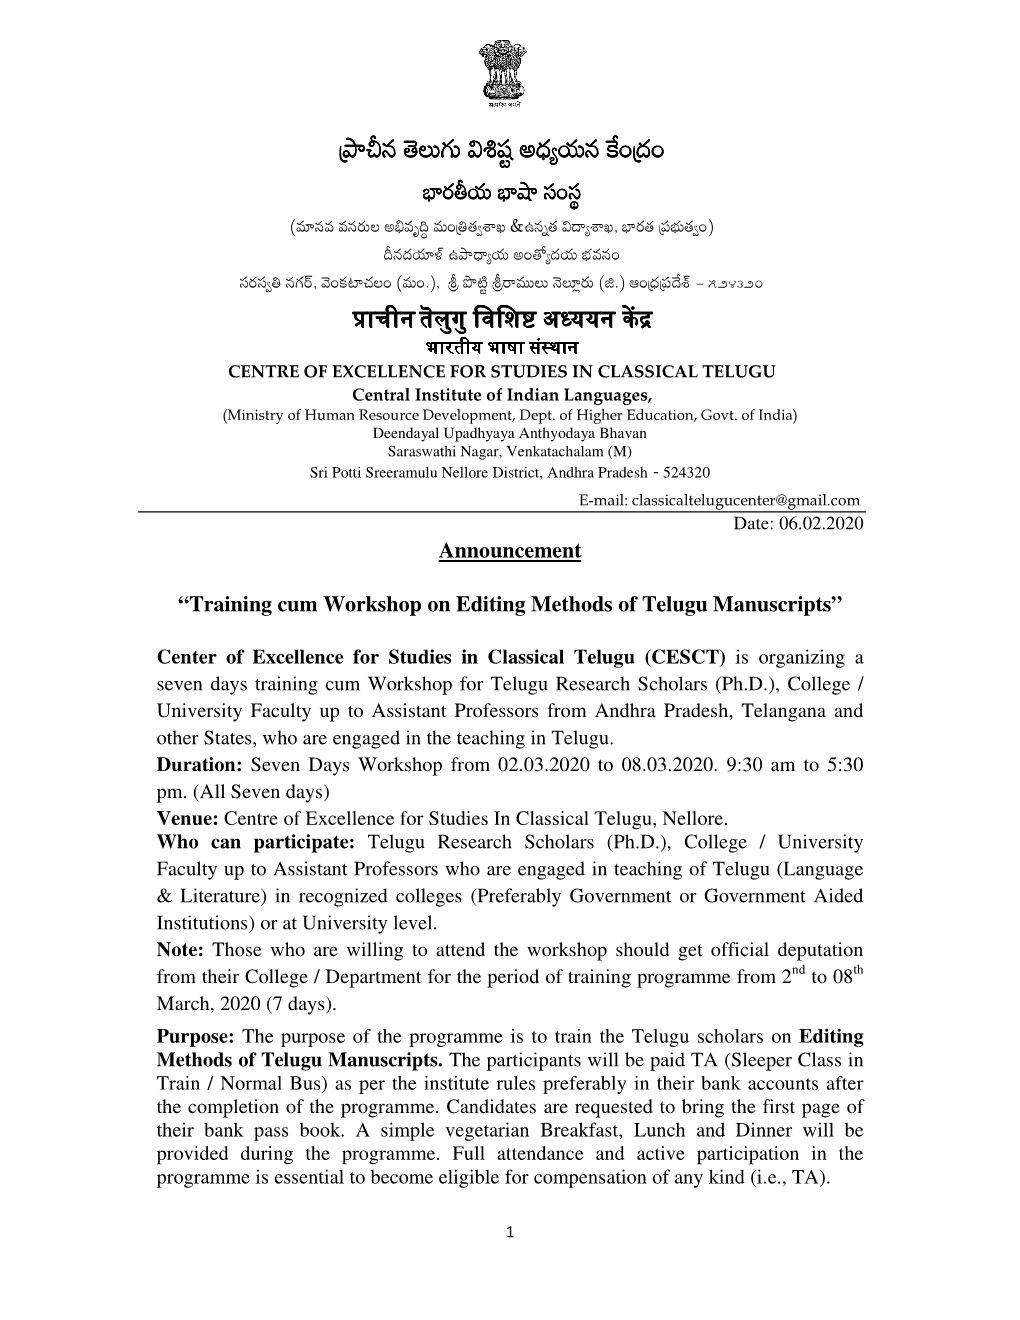 Training Cum Workshop on Editing Methods of Telugu Manuscripts”